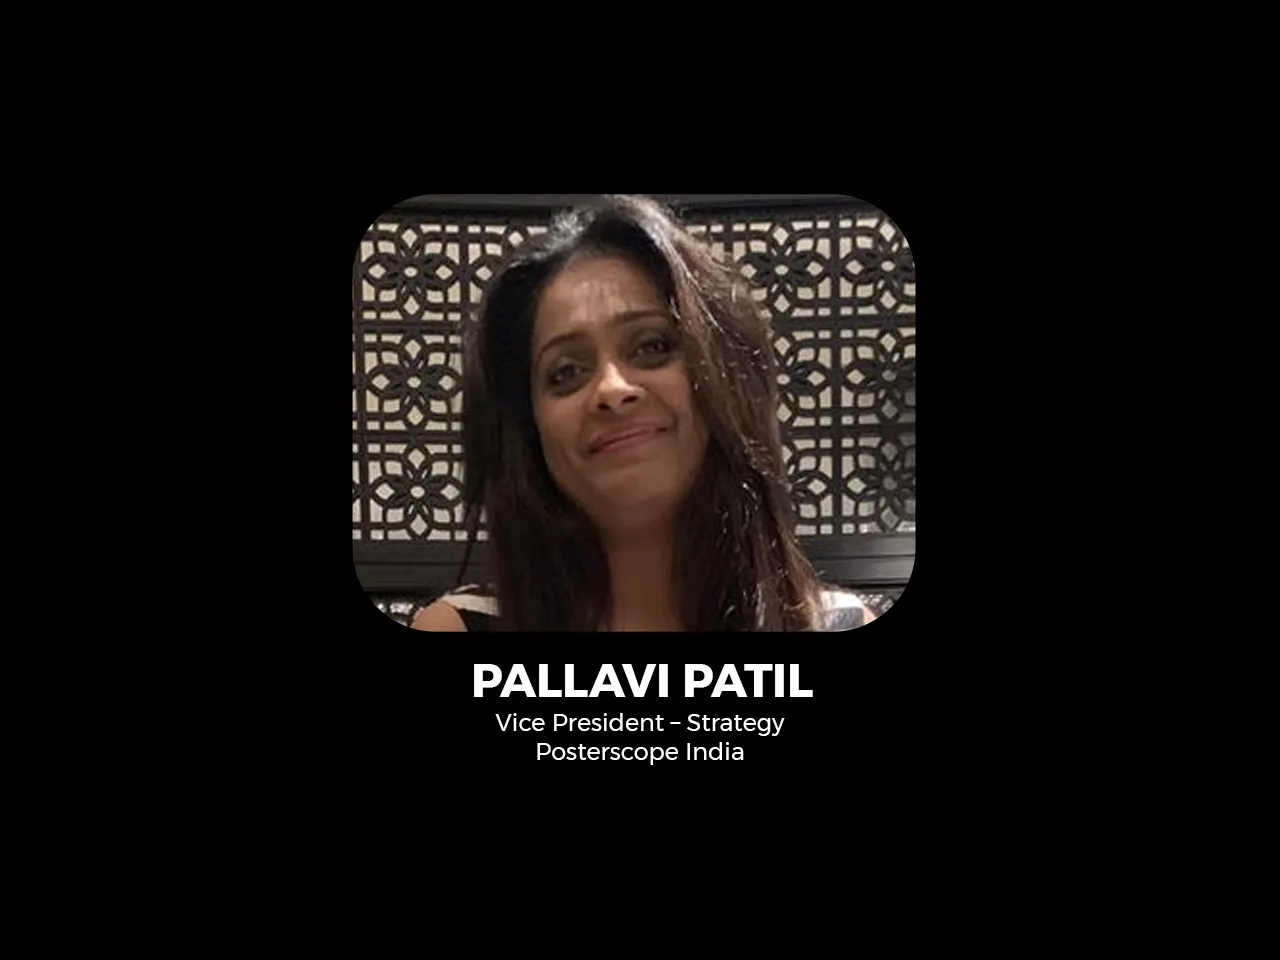 Pallavi Patil